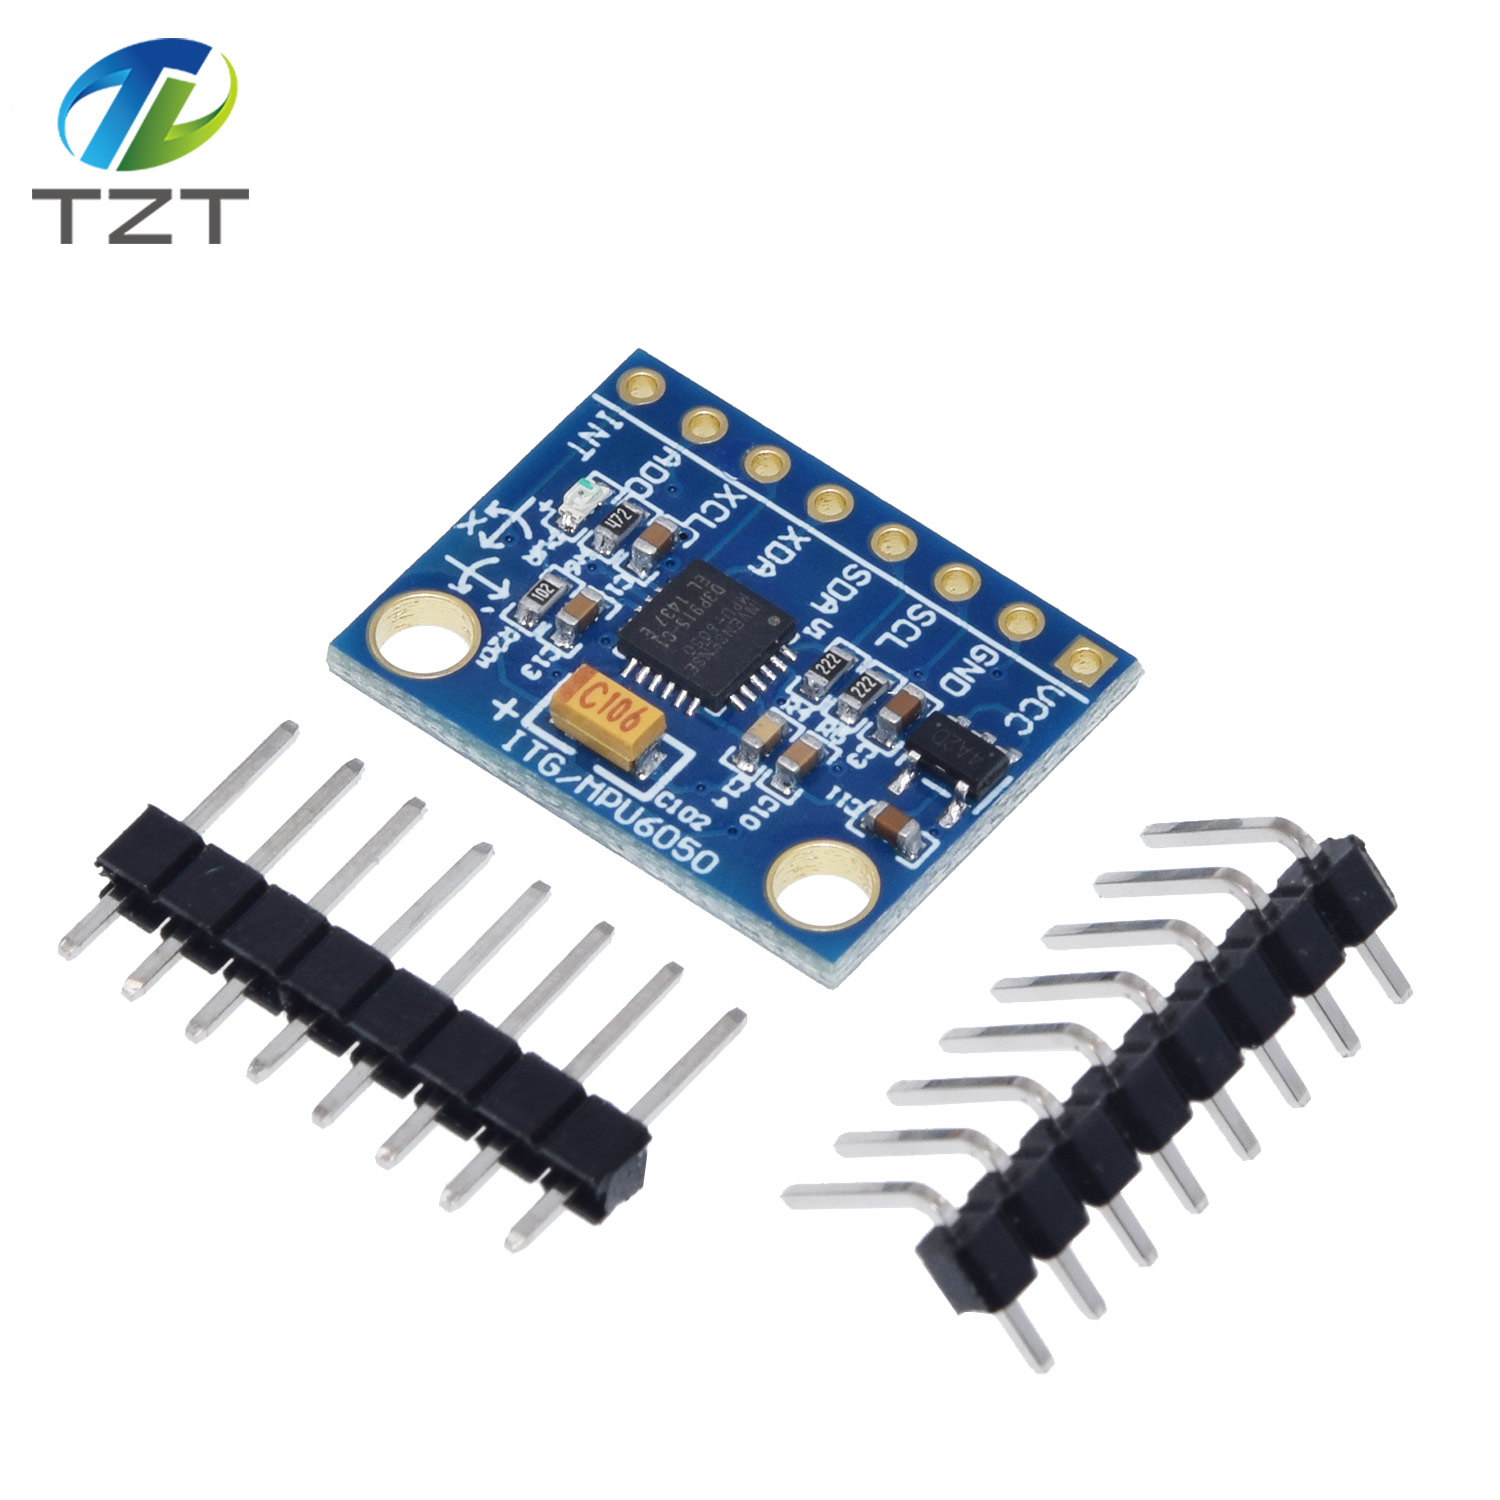 1Set IIC I2C GY-521 MPU-6050 MPU6050 3 Axis Analog Gyroscope Sensors + Accelerometer Module For Arduino With Pins 3-5V DC